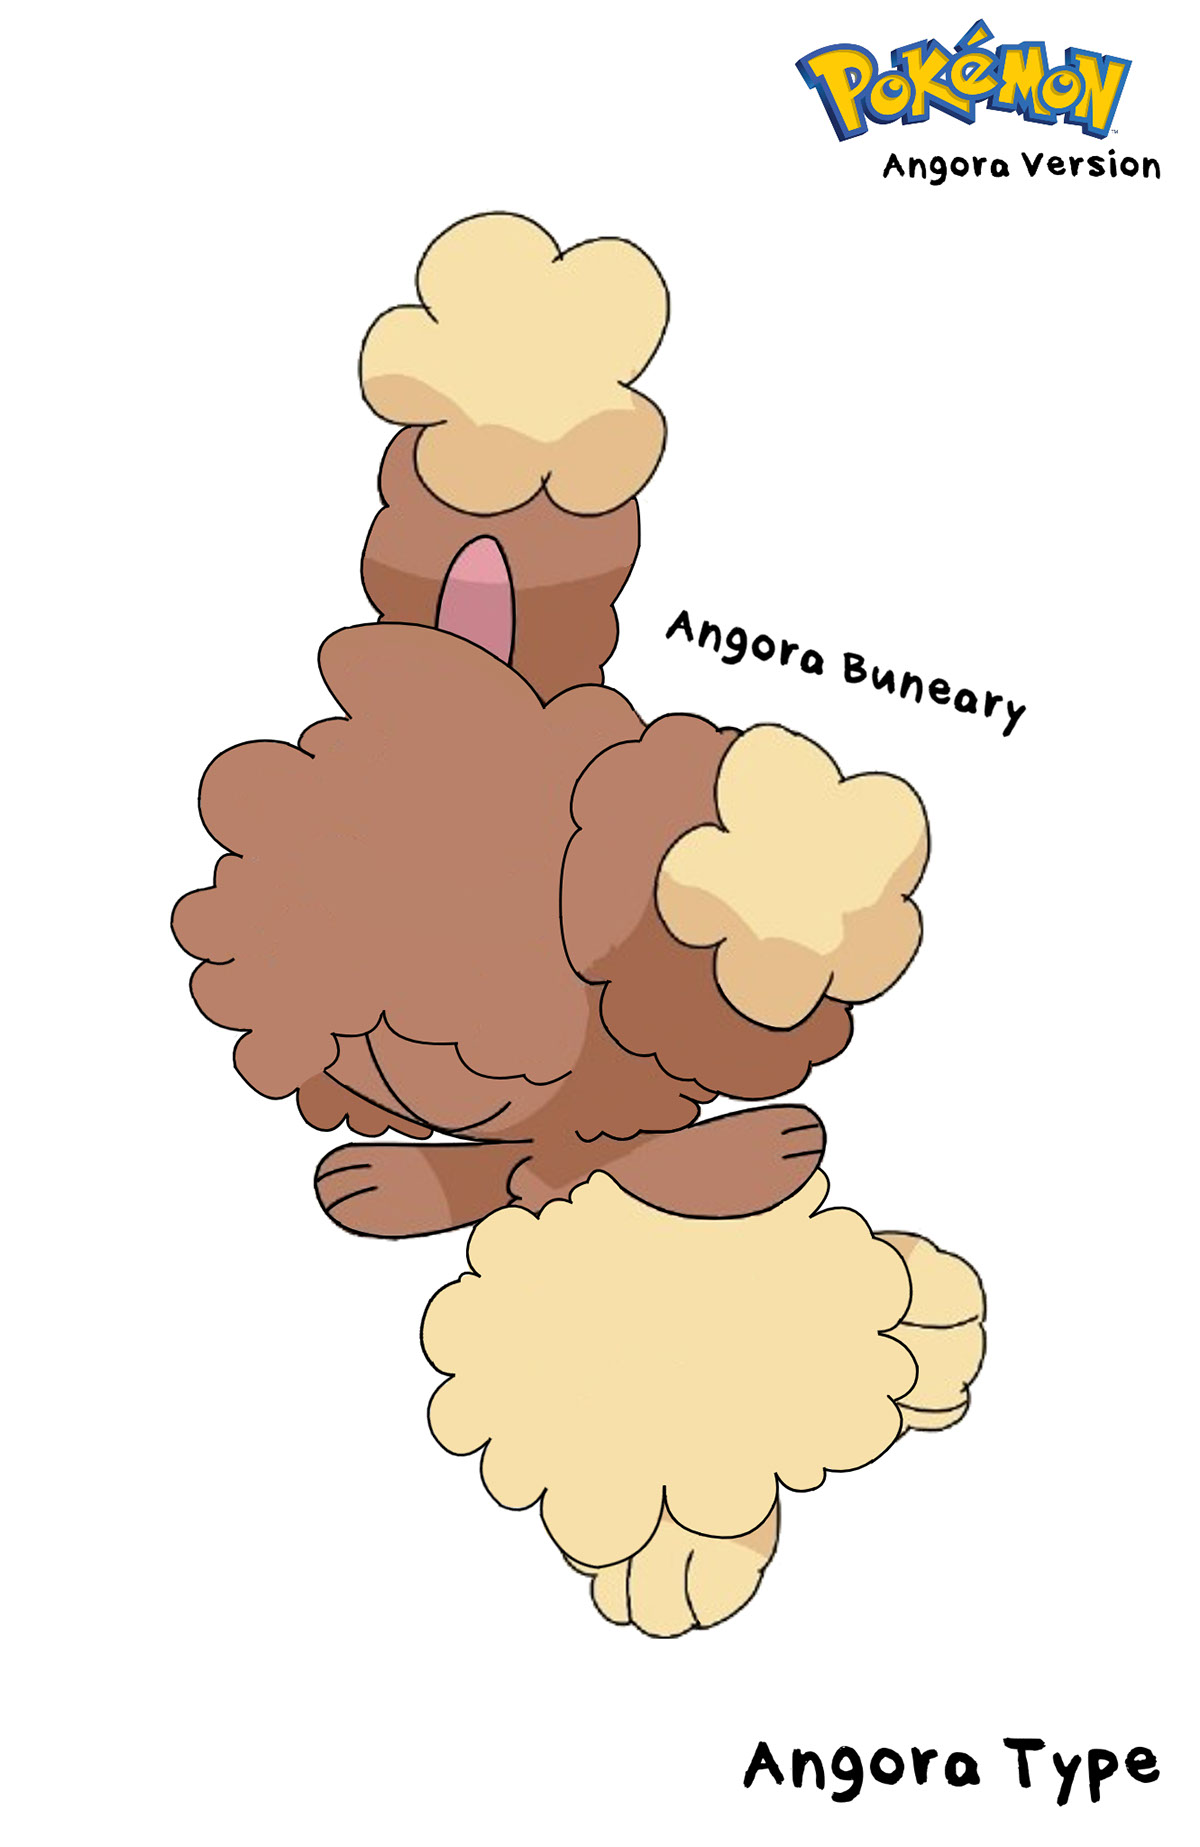 Pokemon Angora Version Angora Buneary rendition image